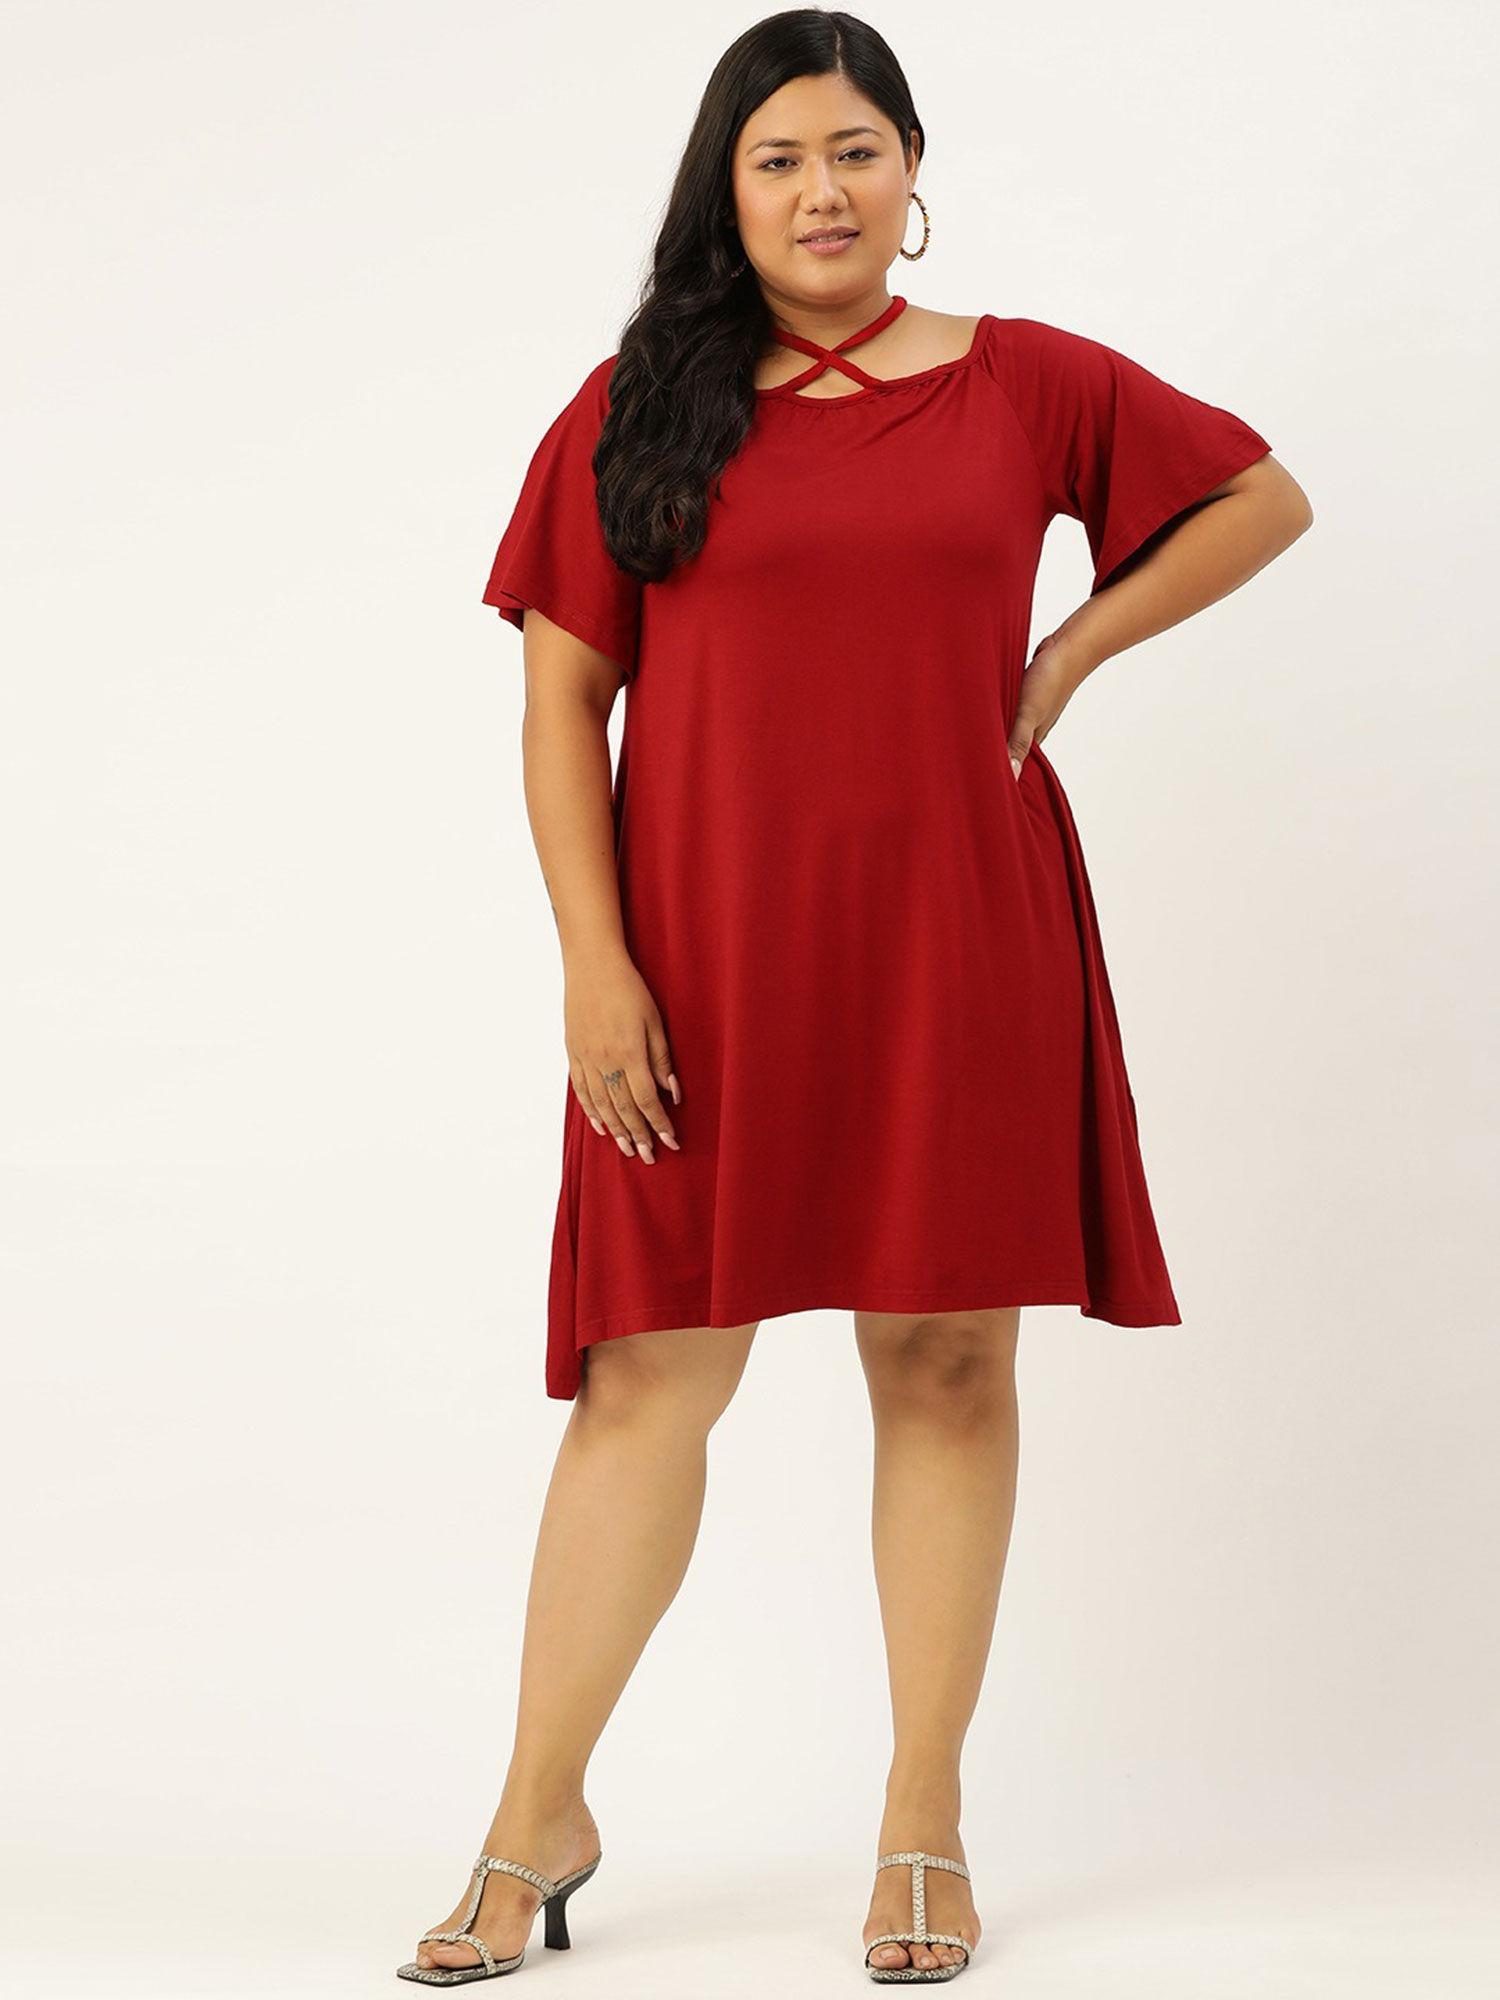 women's maroon solid color party wear a-line dress